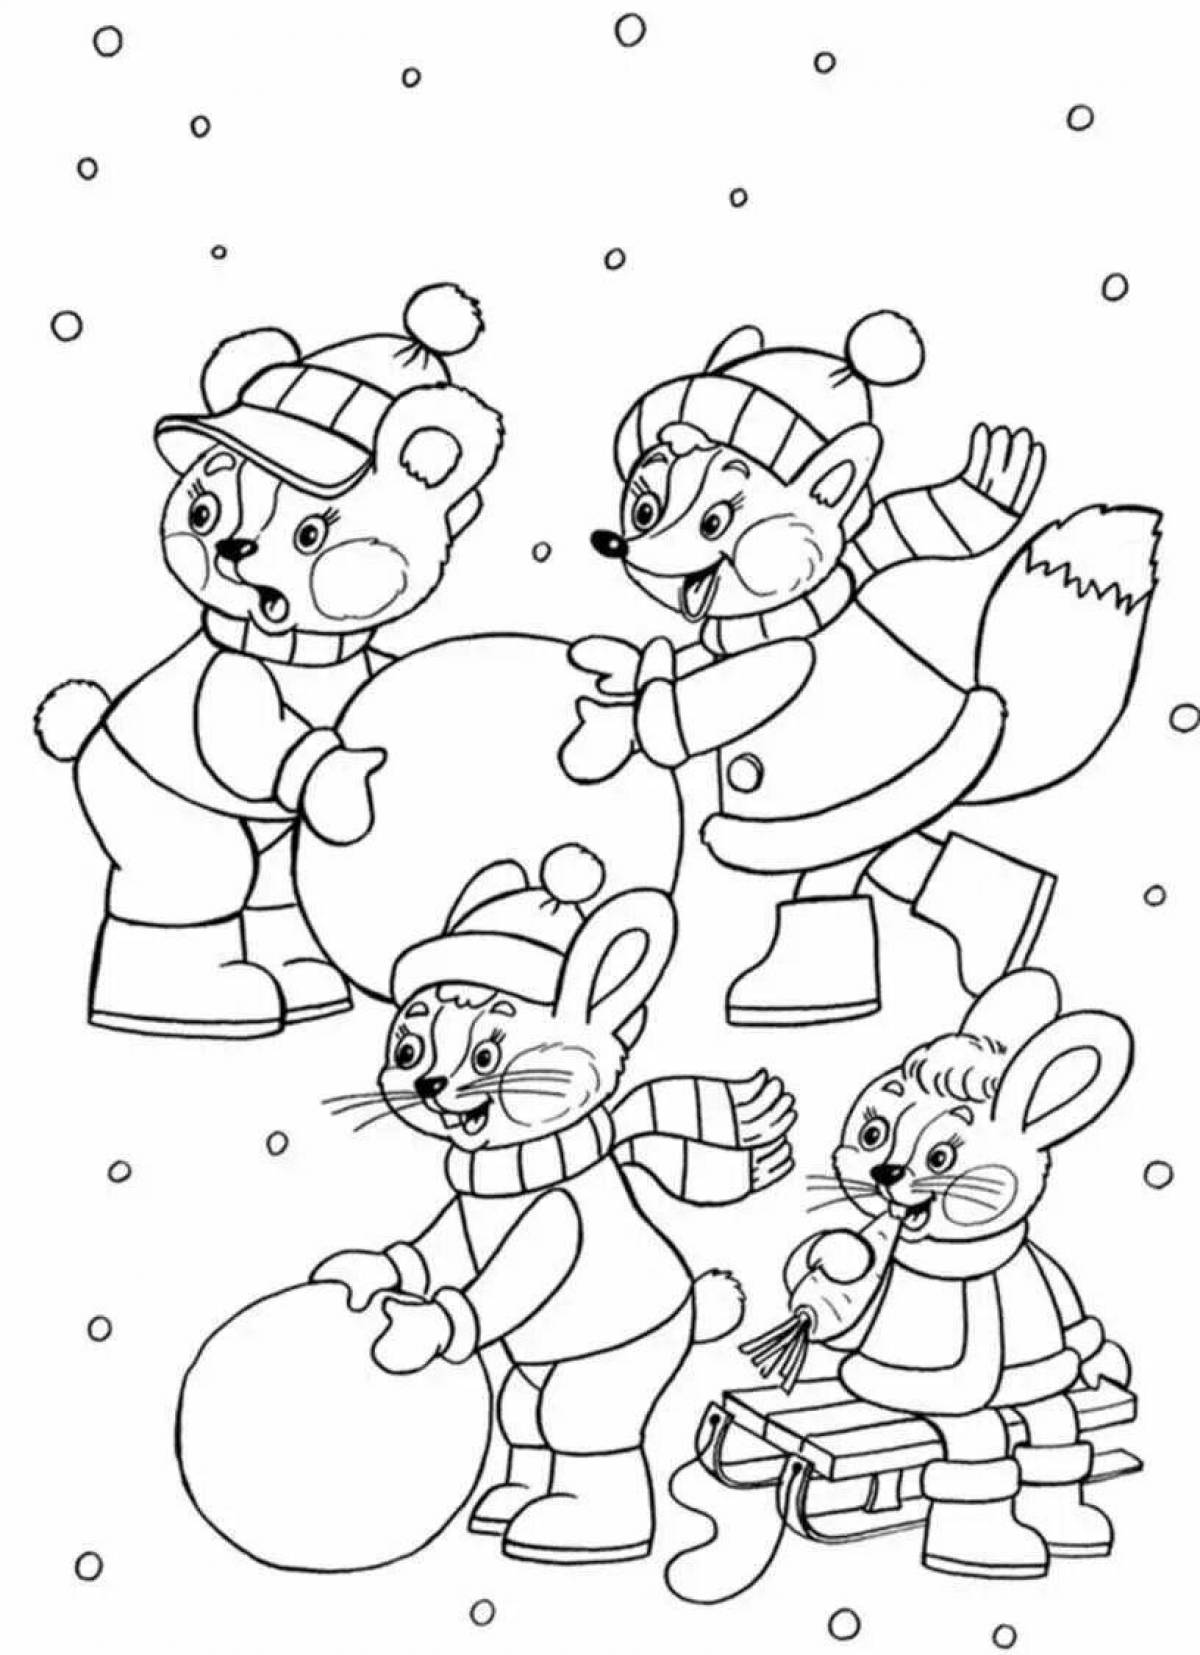 Crazy coloring book winter fun for kids 3-4 years old in kindergarten